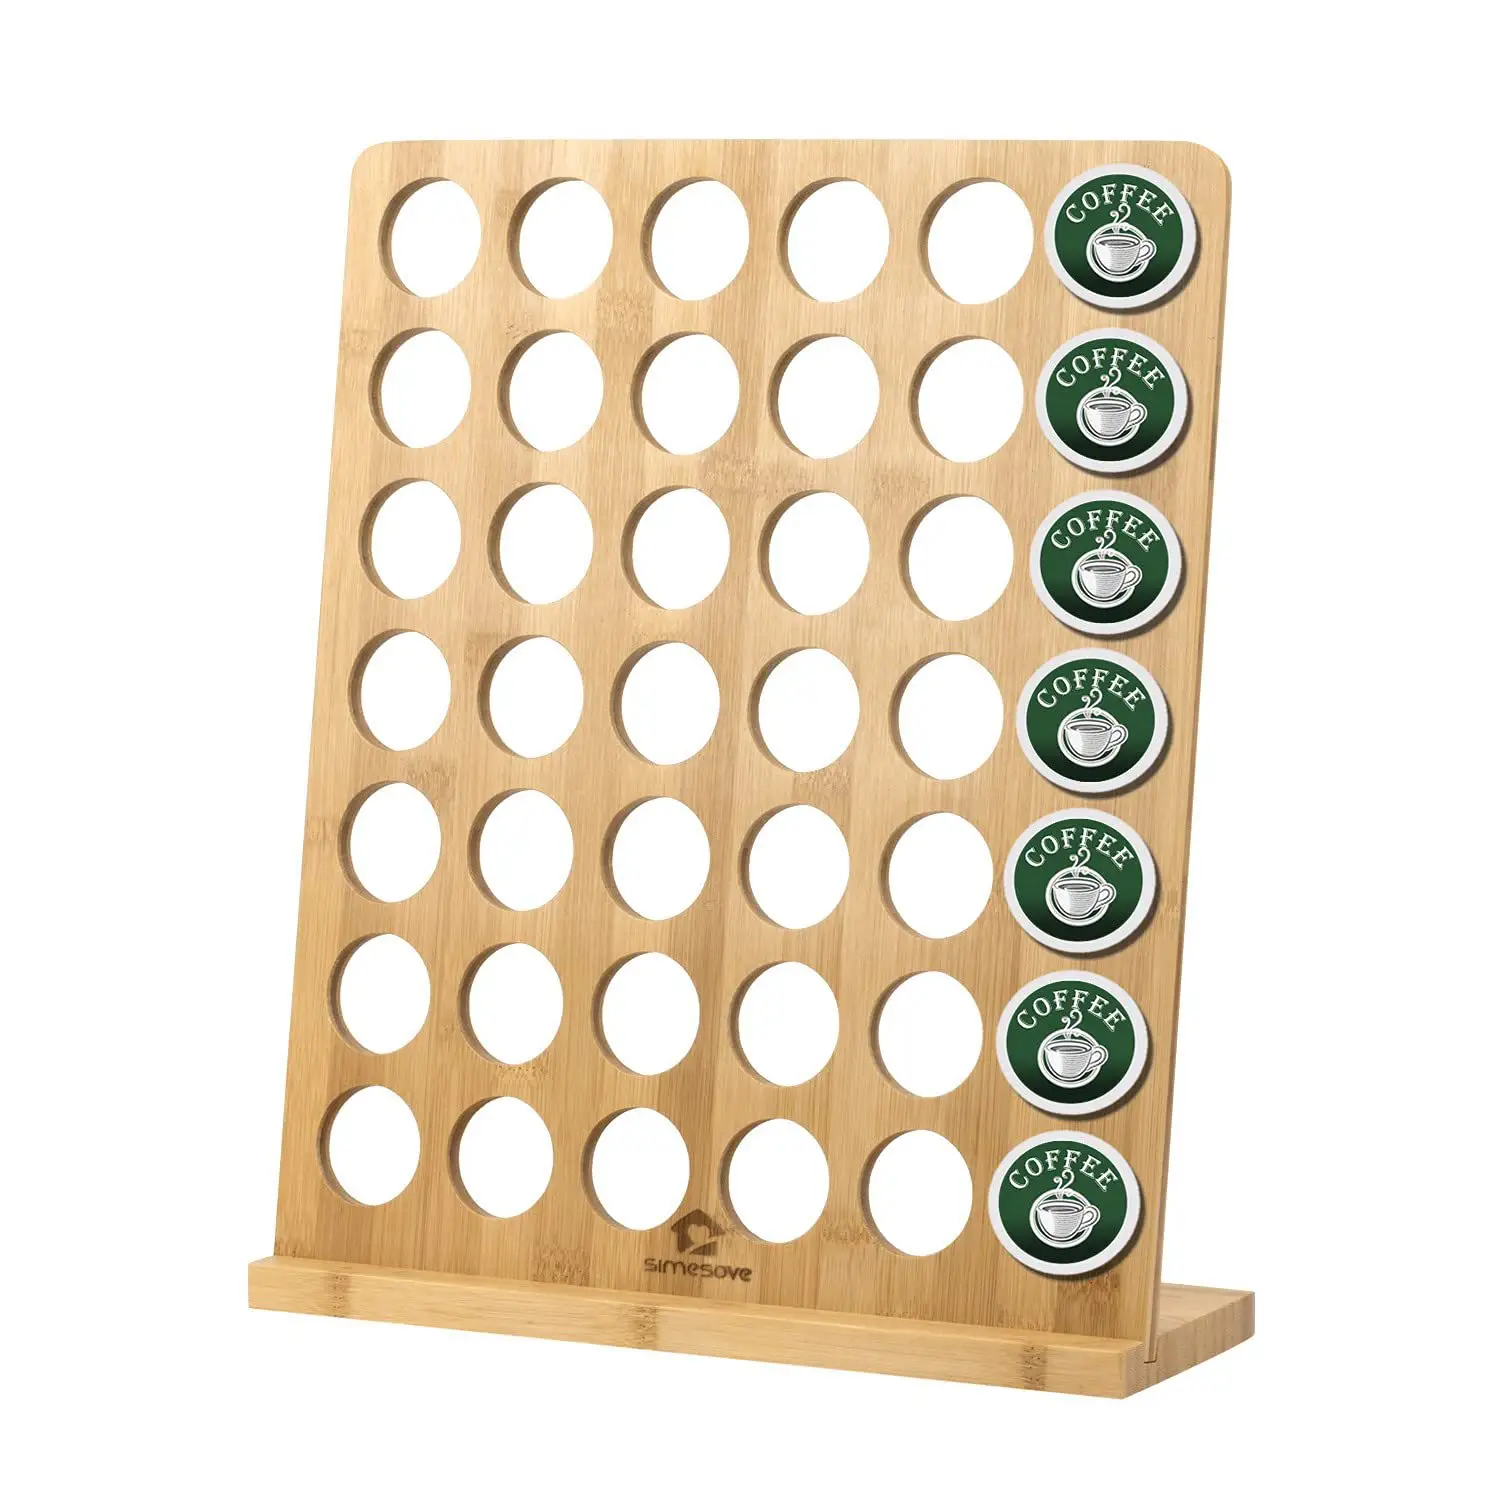 Bamboo coffee capsule storage organizer built-in Eco-friendly shelf